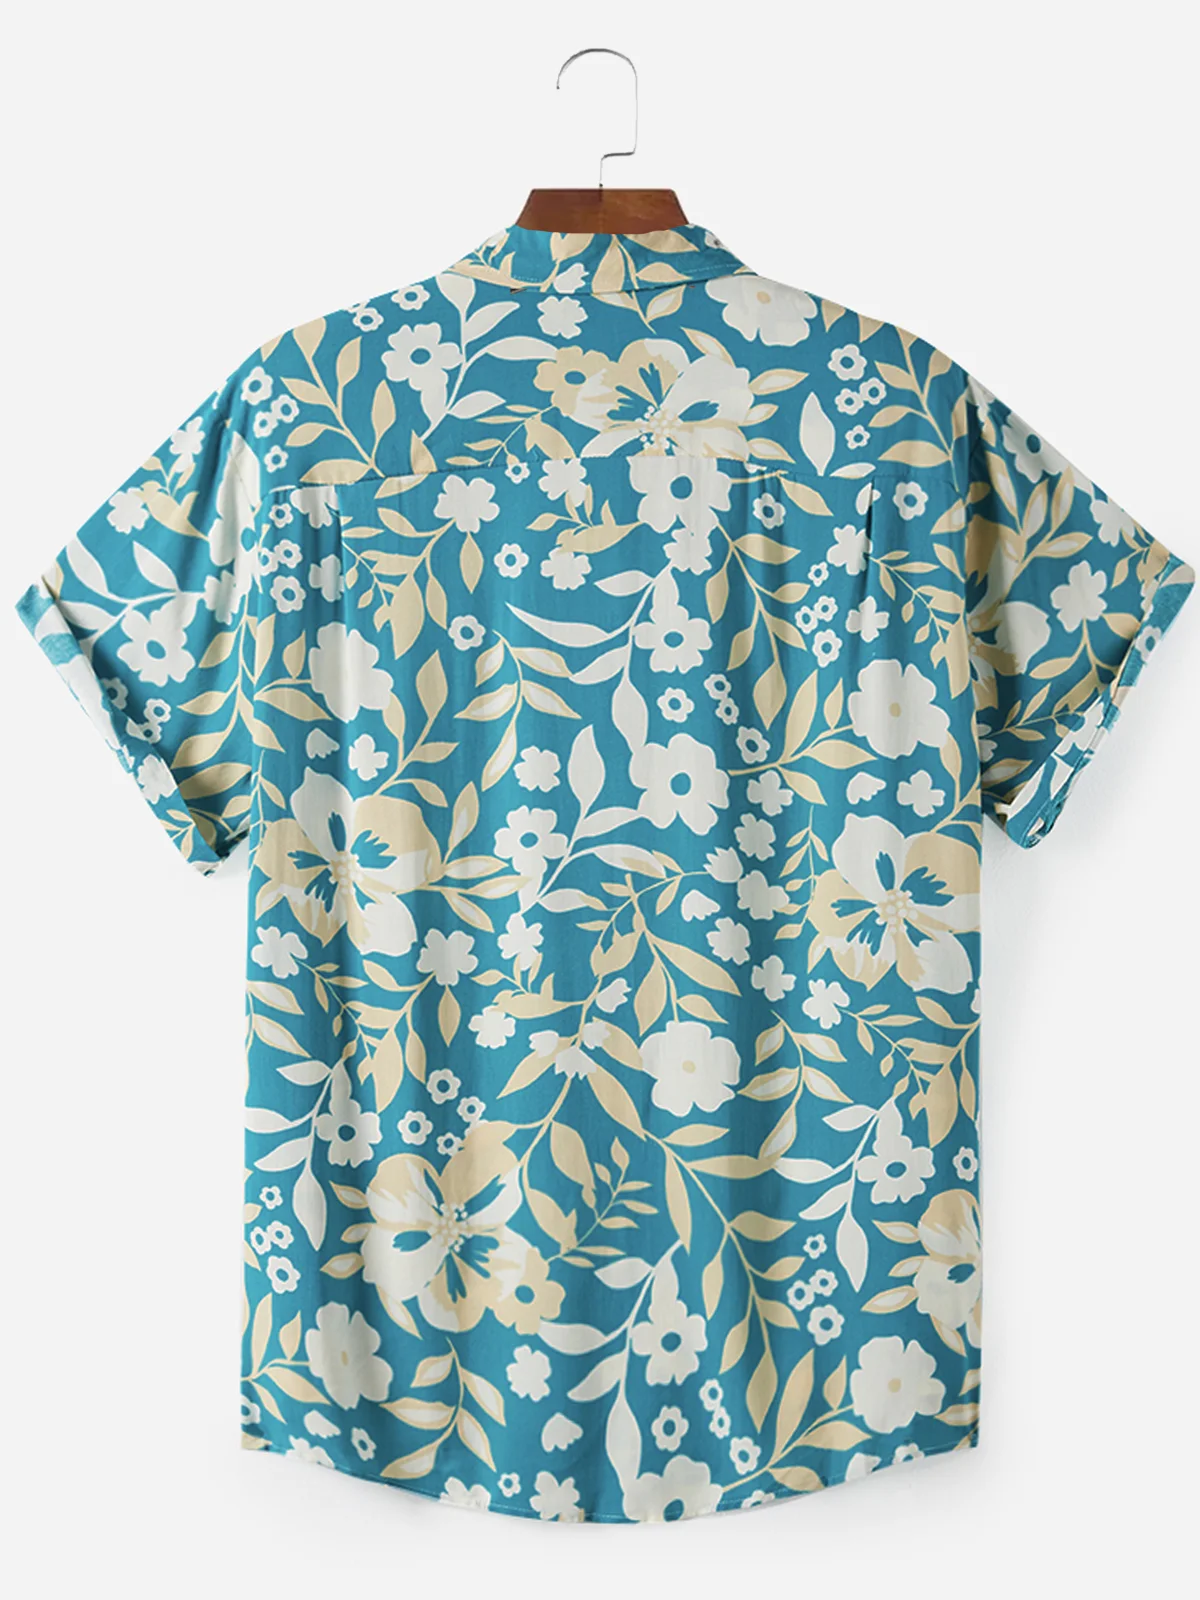 Royaura Cotton Vacation Beach Blue Men's Hawaiian Shirts Comfortable Blend Breathable Aloha Camp Shirts